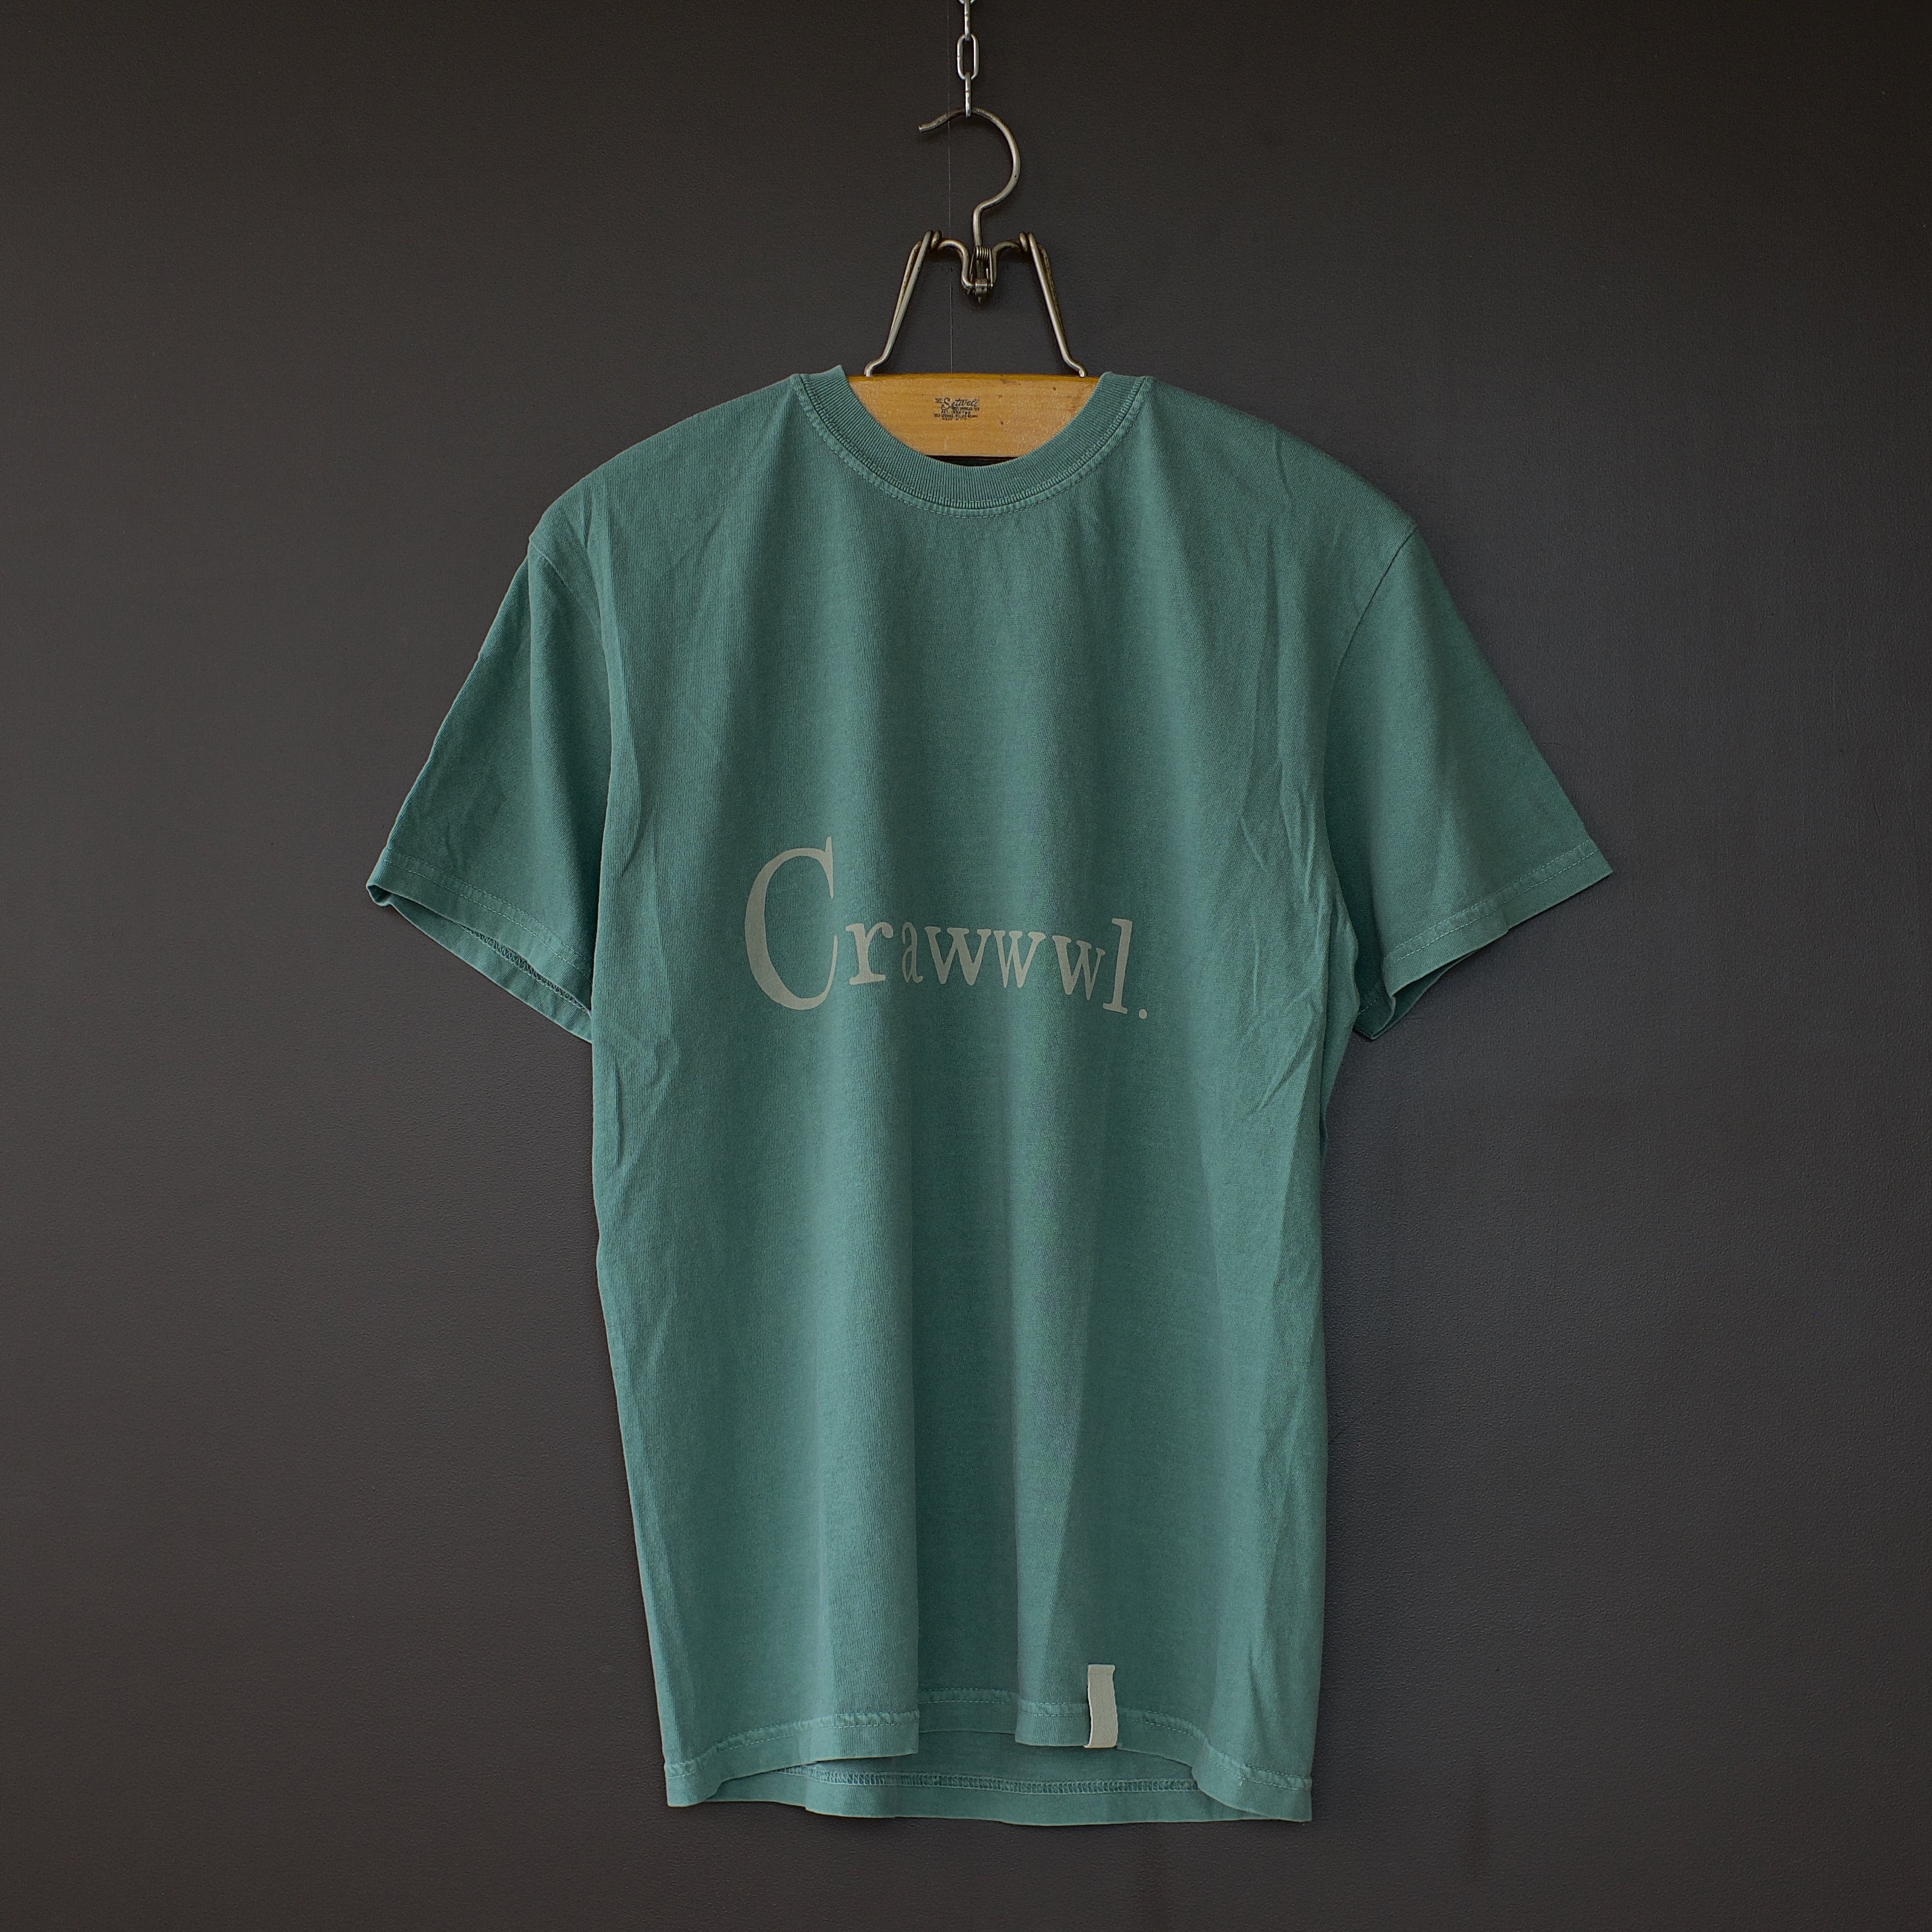 modem design】Crawwwl. tee (green) dros dro